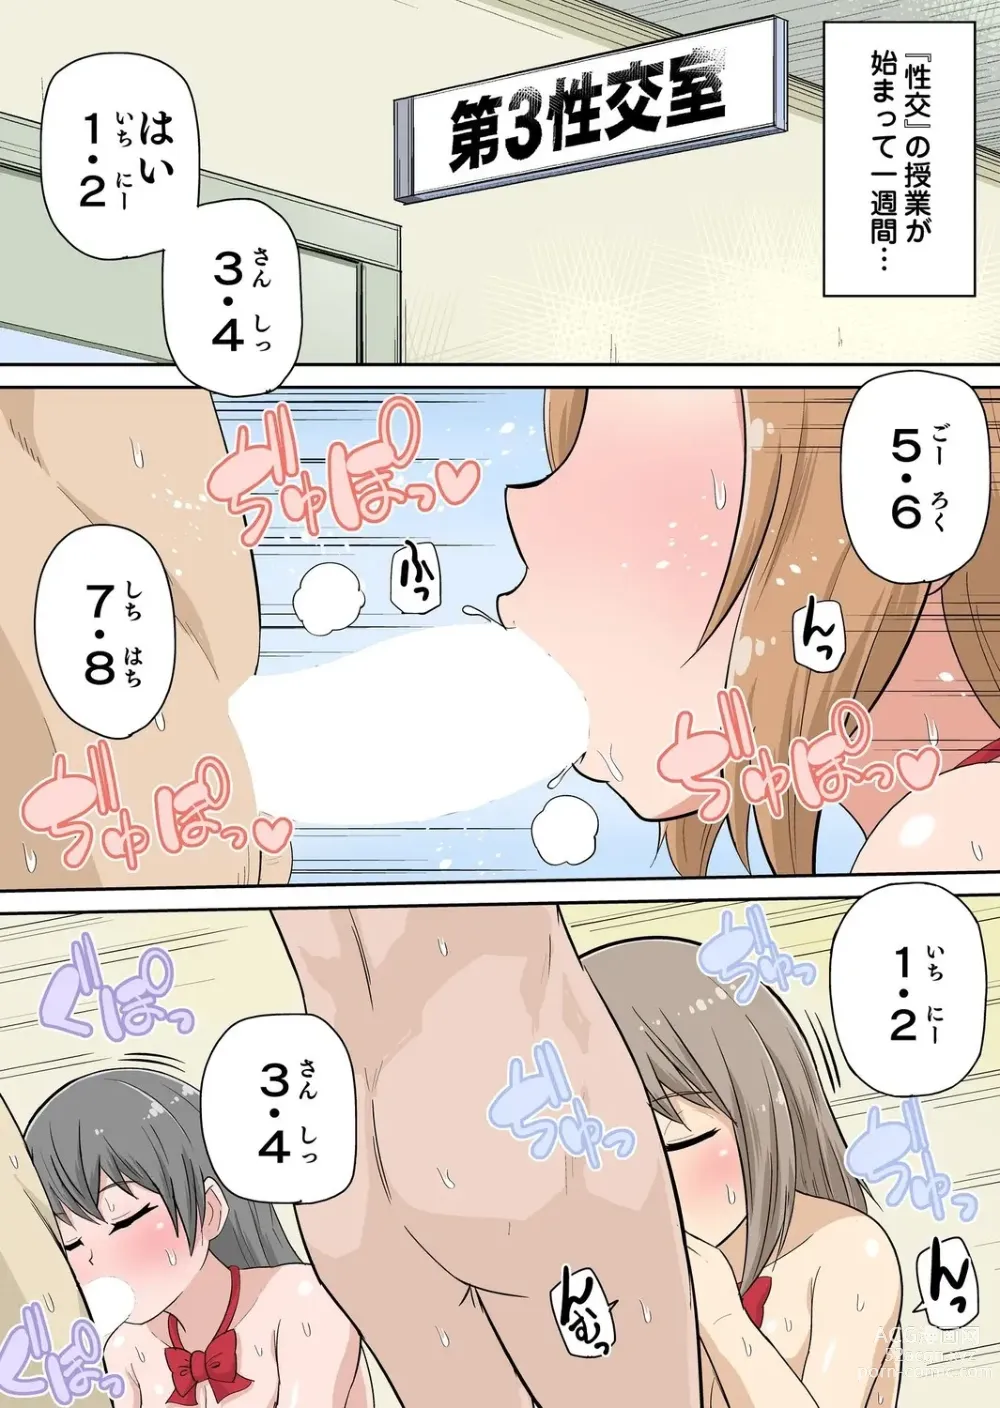 Page 85 of manga Classmate to Ecchi Jugyou Season two Chapter1~Chapter4